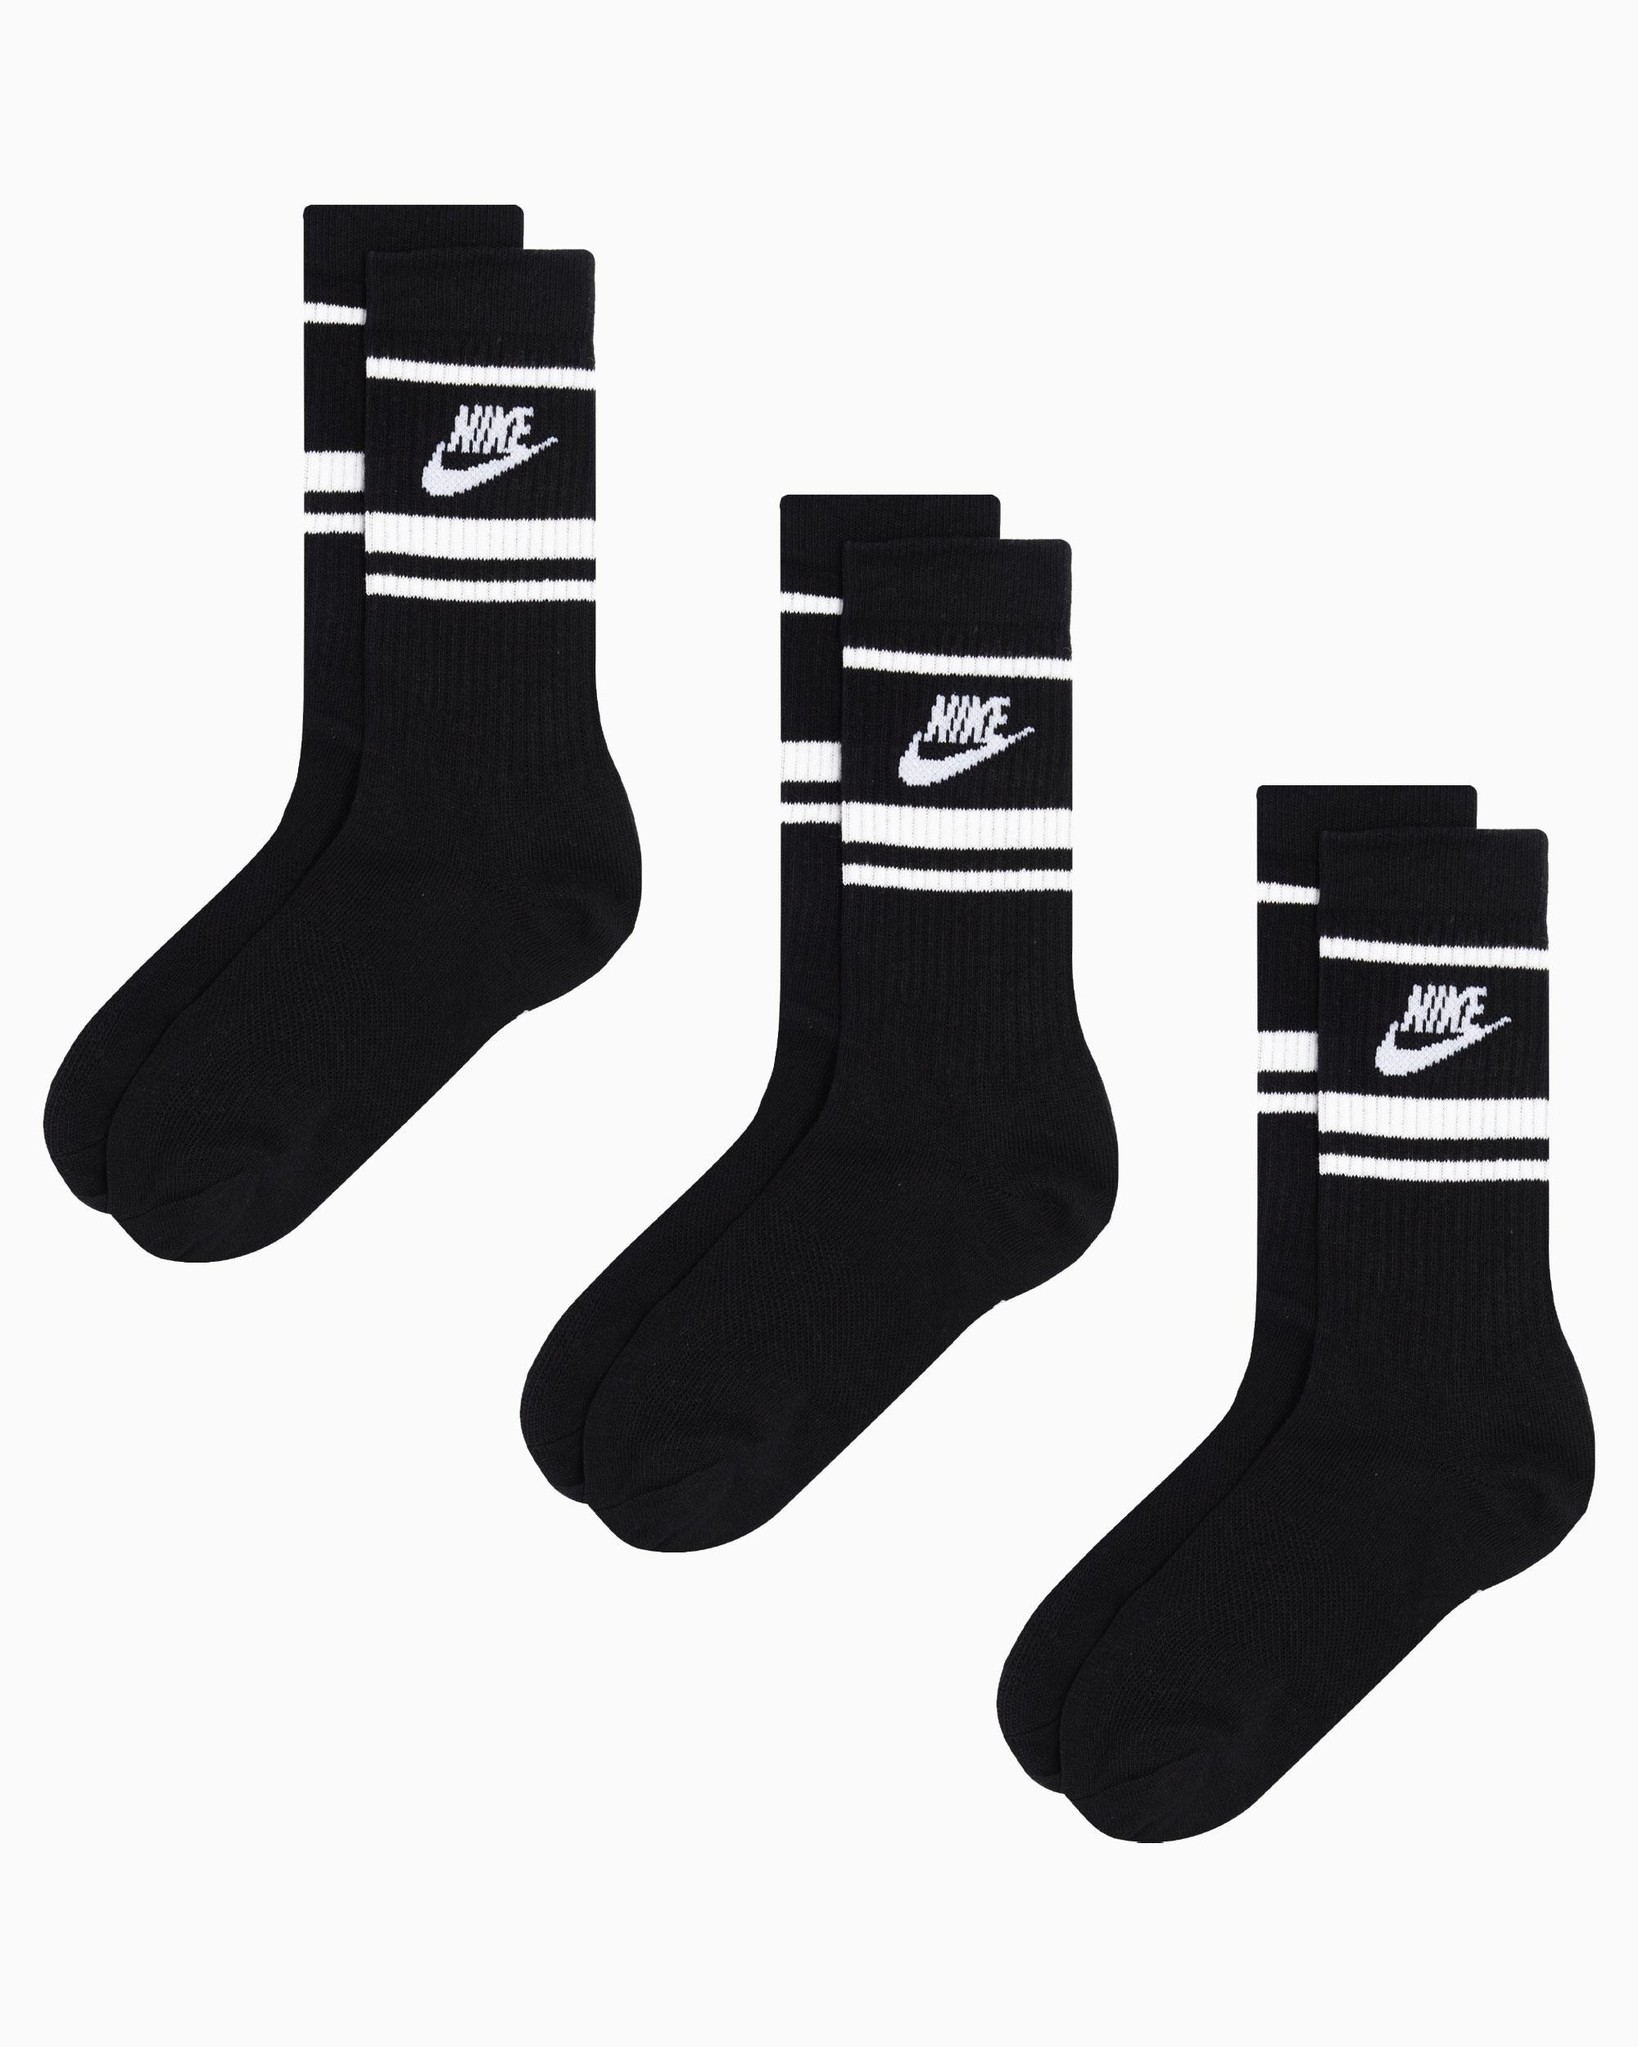 Nike - NSW Essential Crew - Black socks-38 - 42